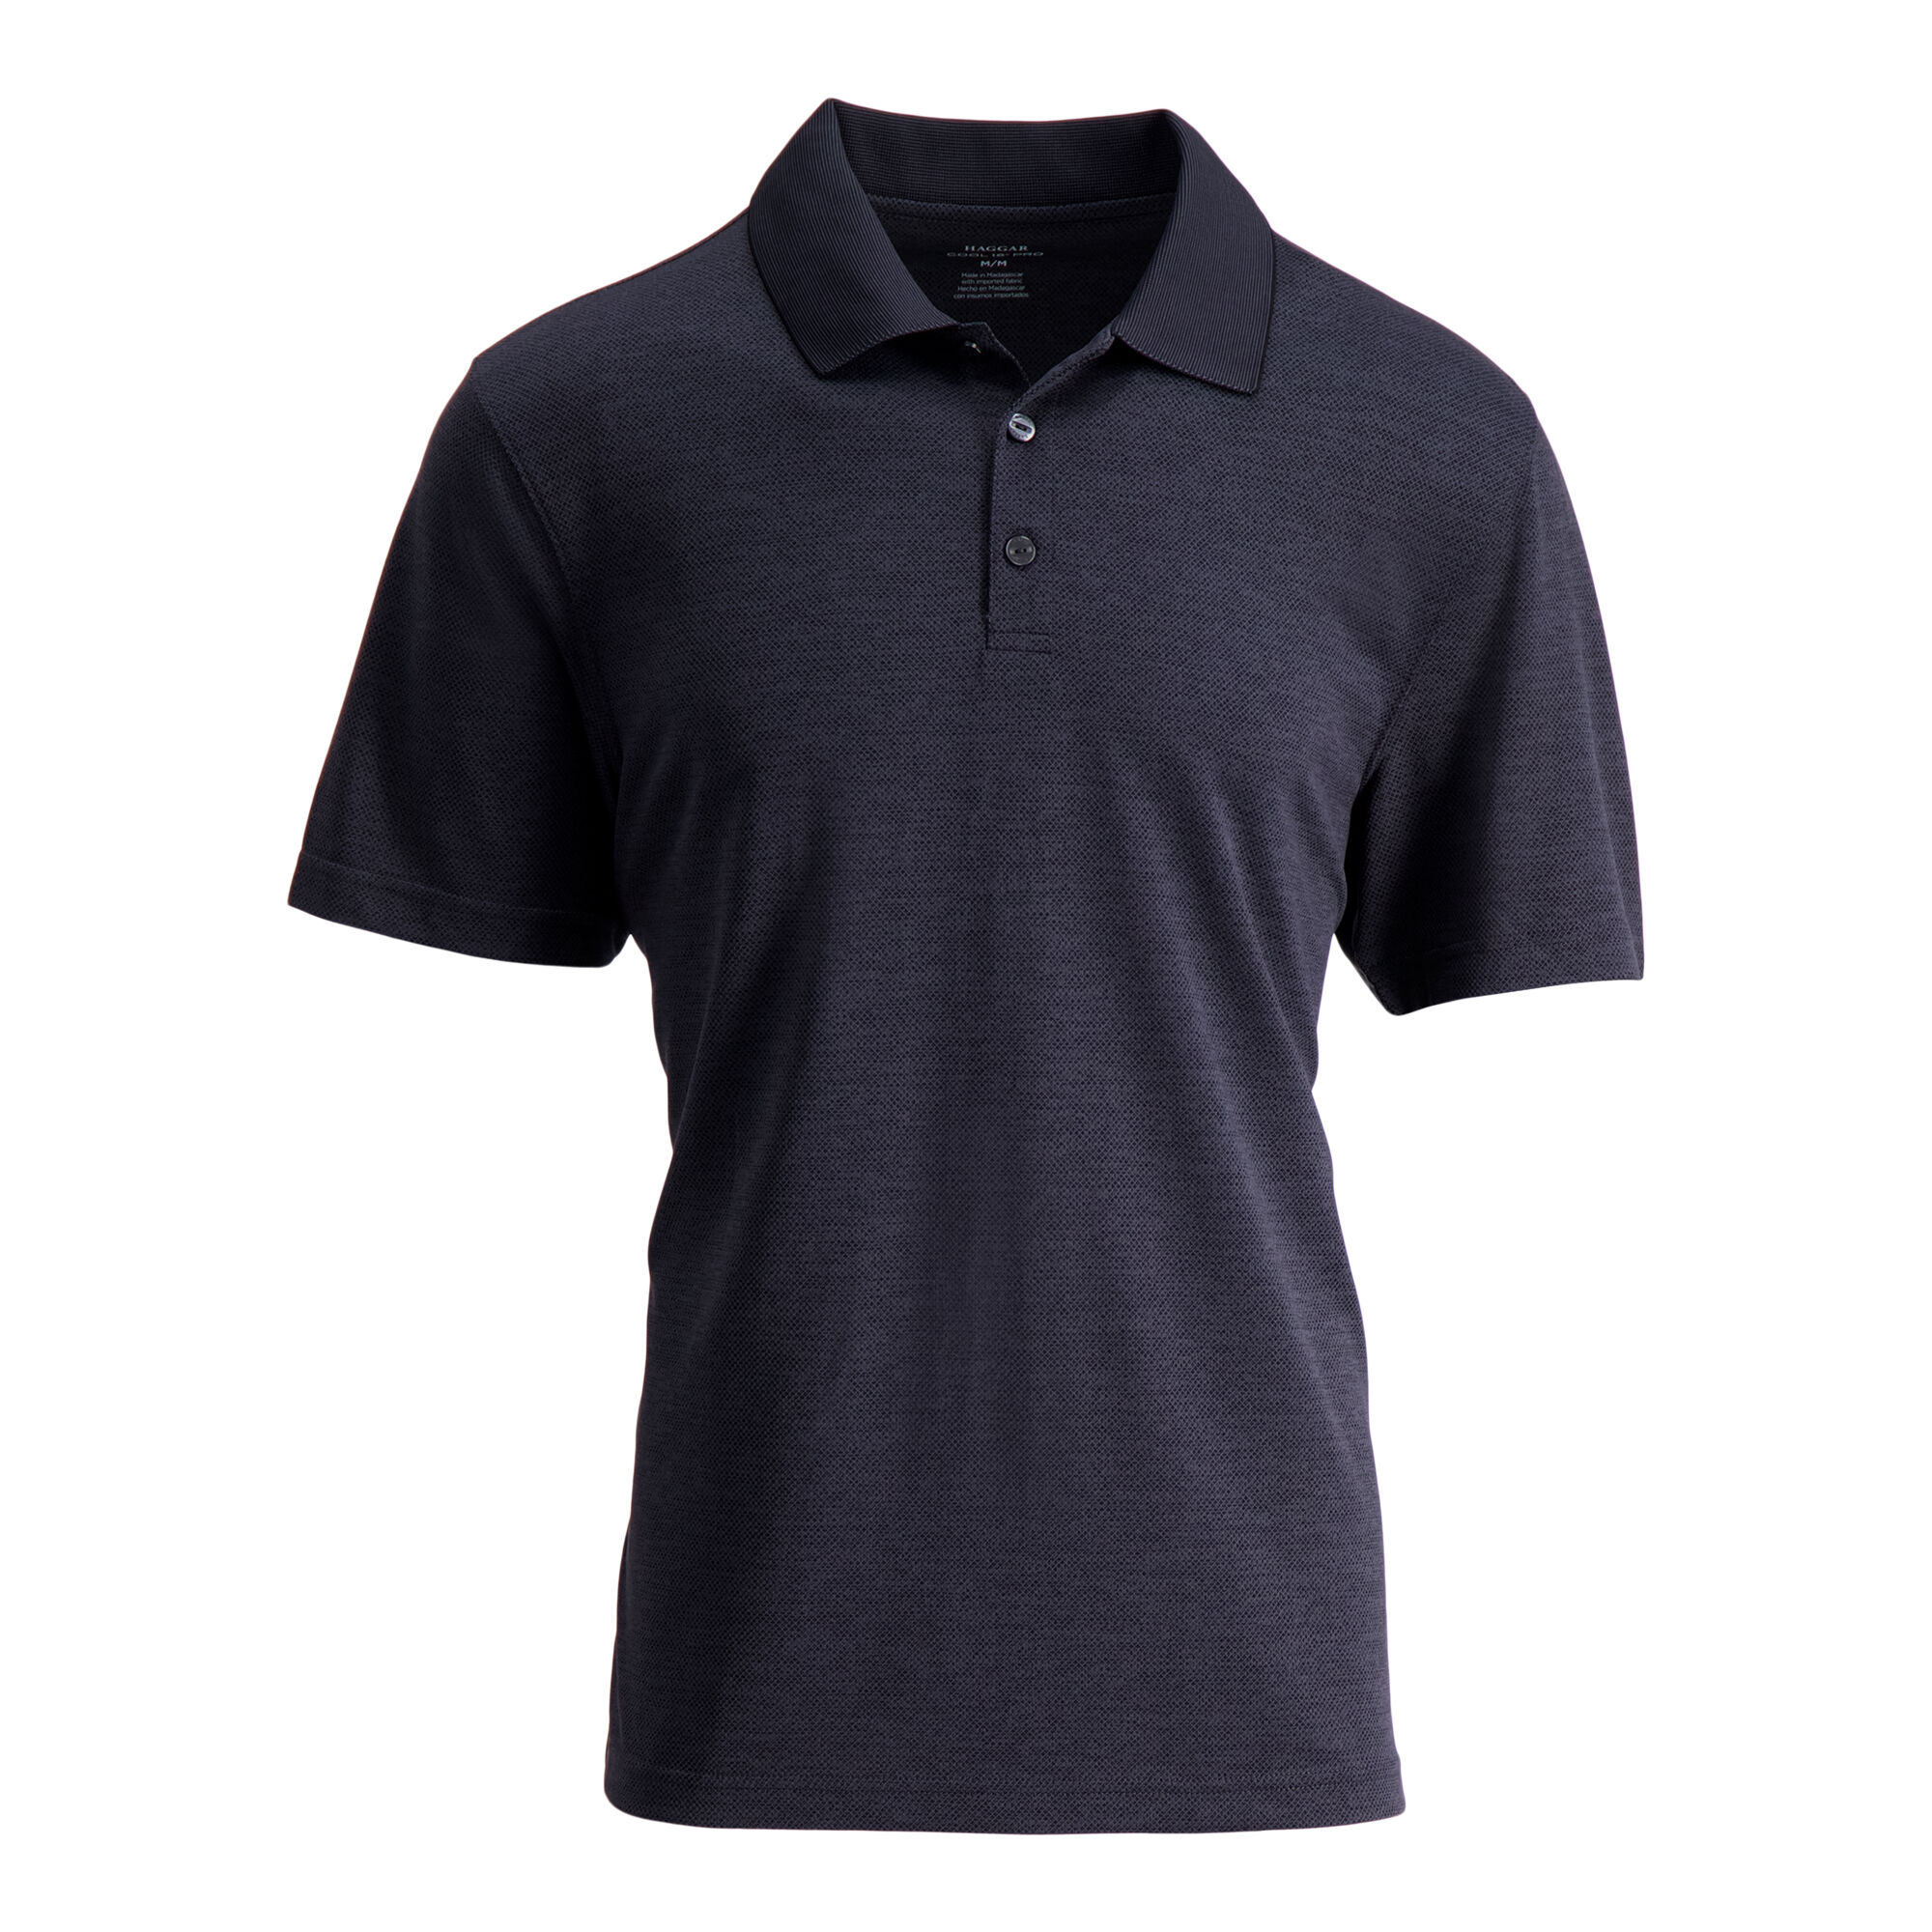 Haggar Cool 18 Pro Textured Golf Polo Black (028462 Clothing Shirts & Tops) photo